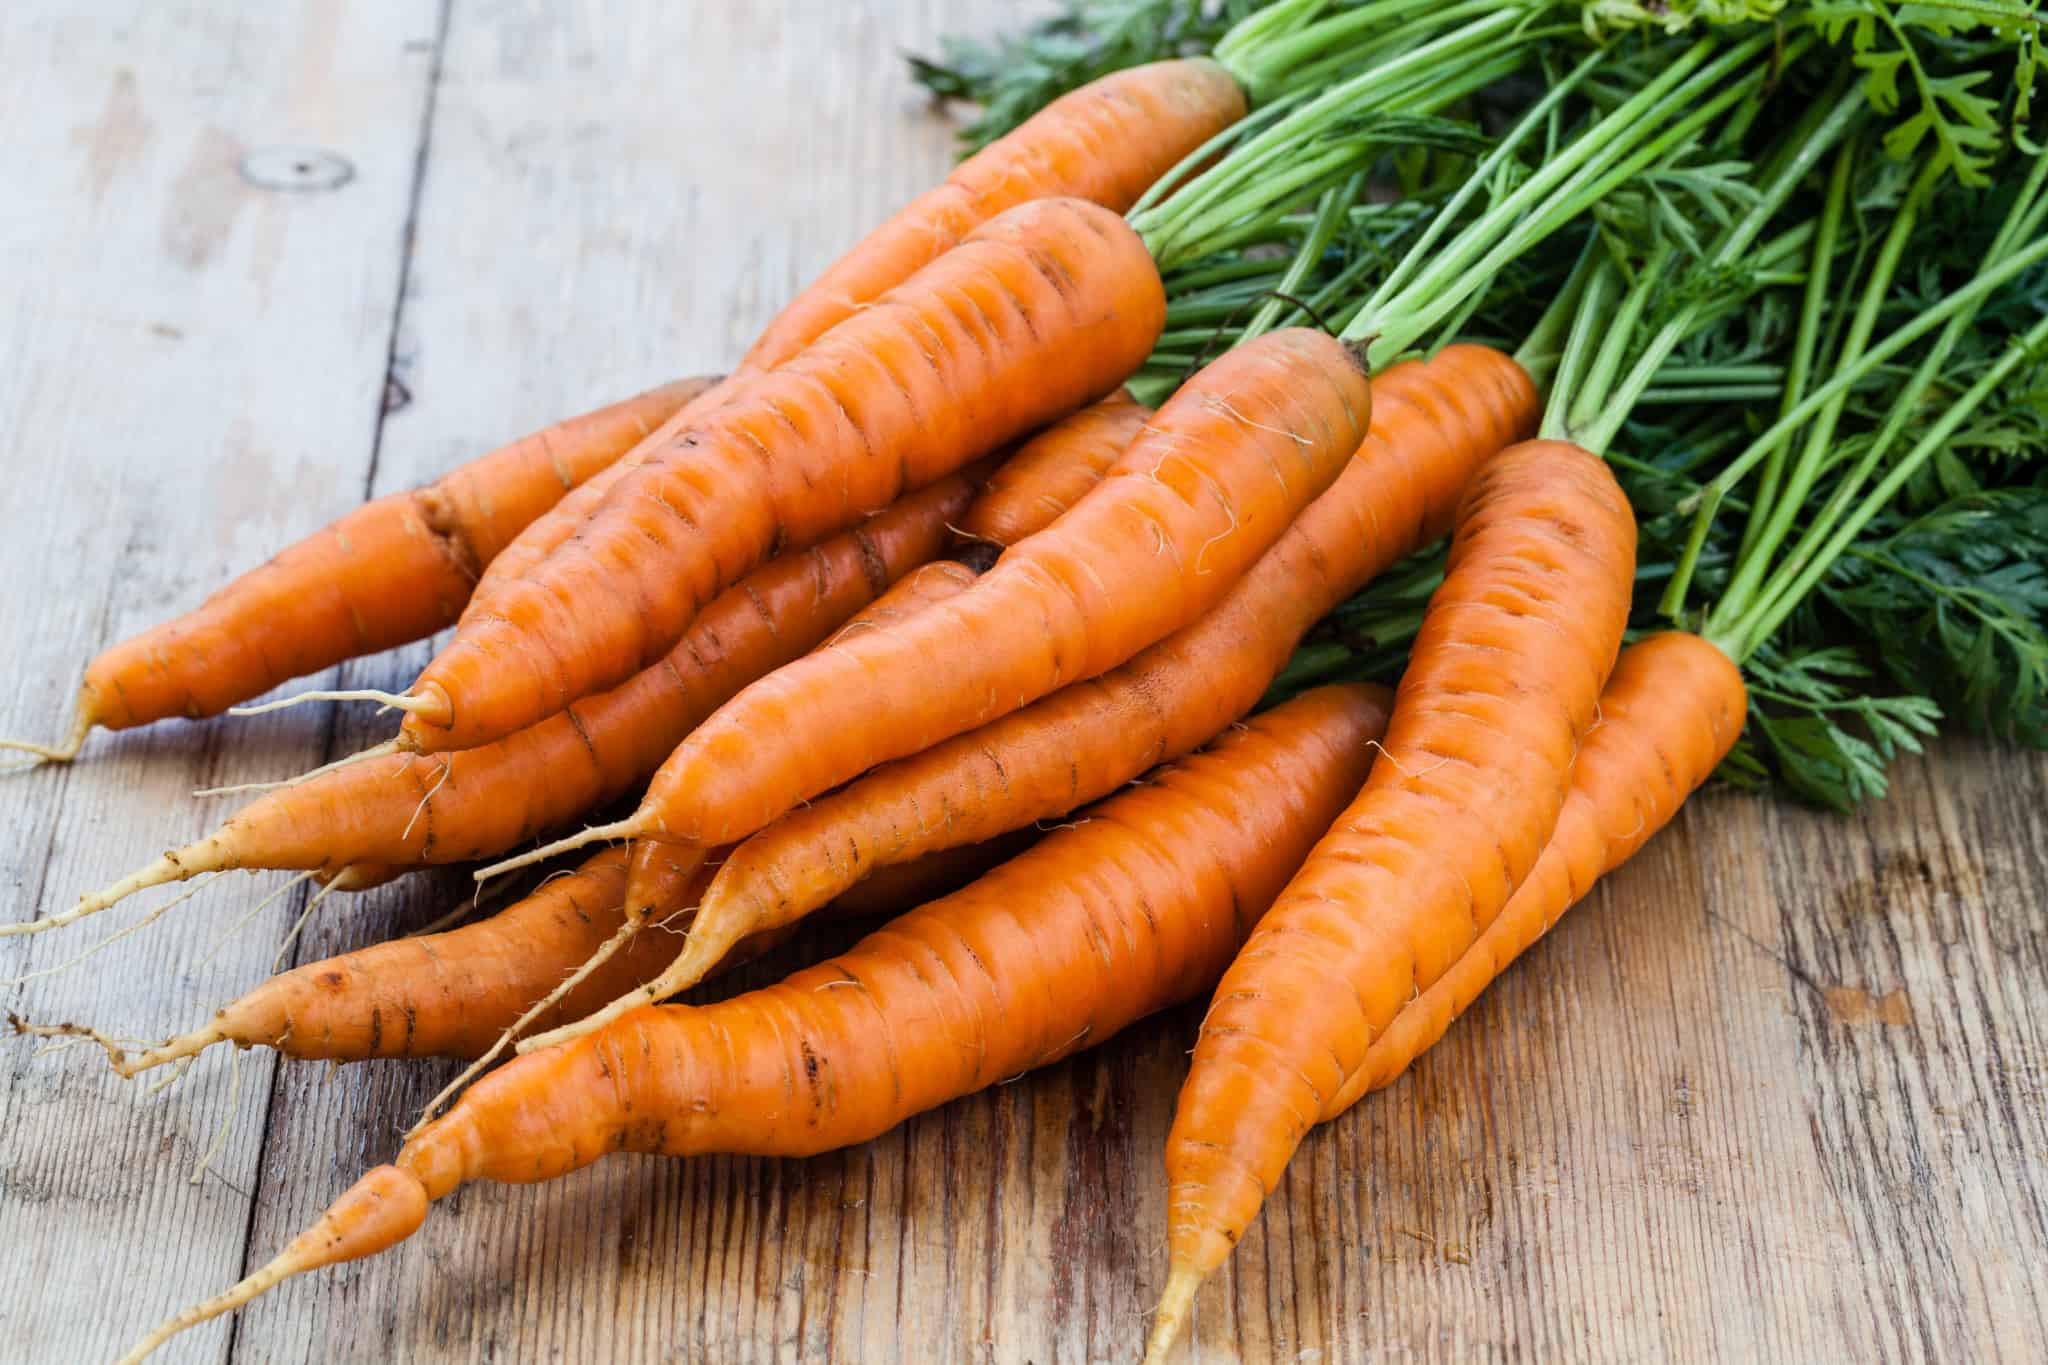 carrots improves eyesight